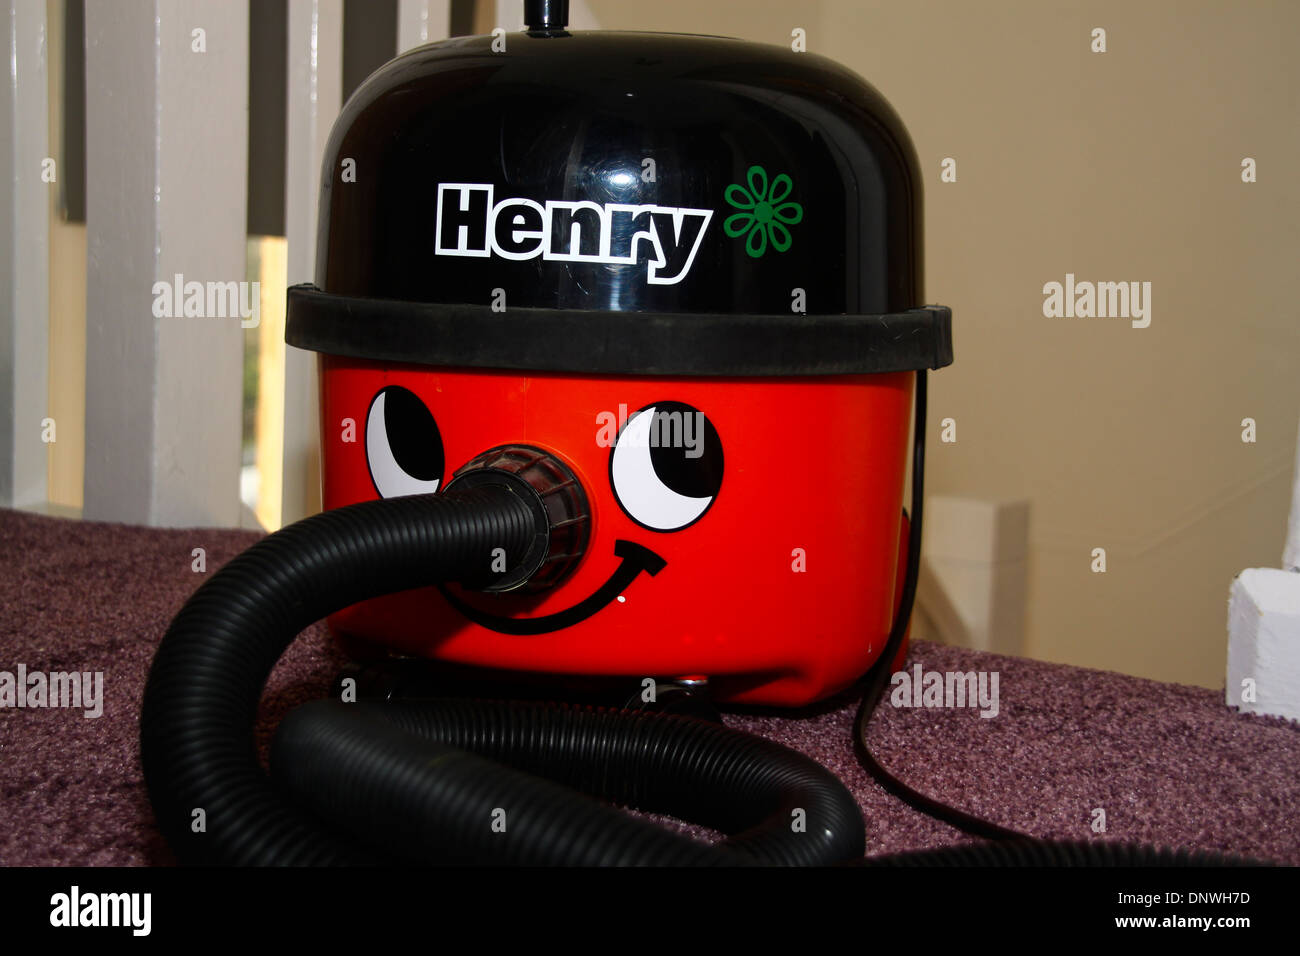 Numatic Henry vacuum cleaner Stock Photo